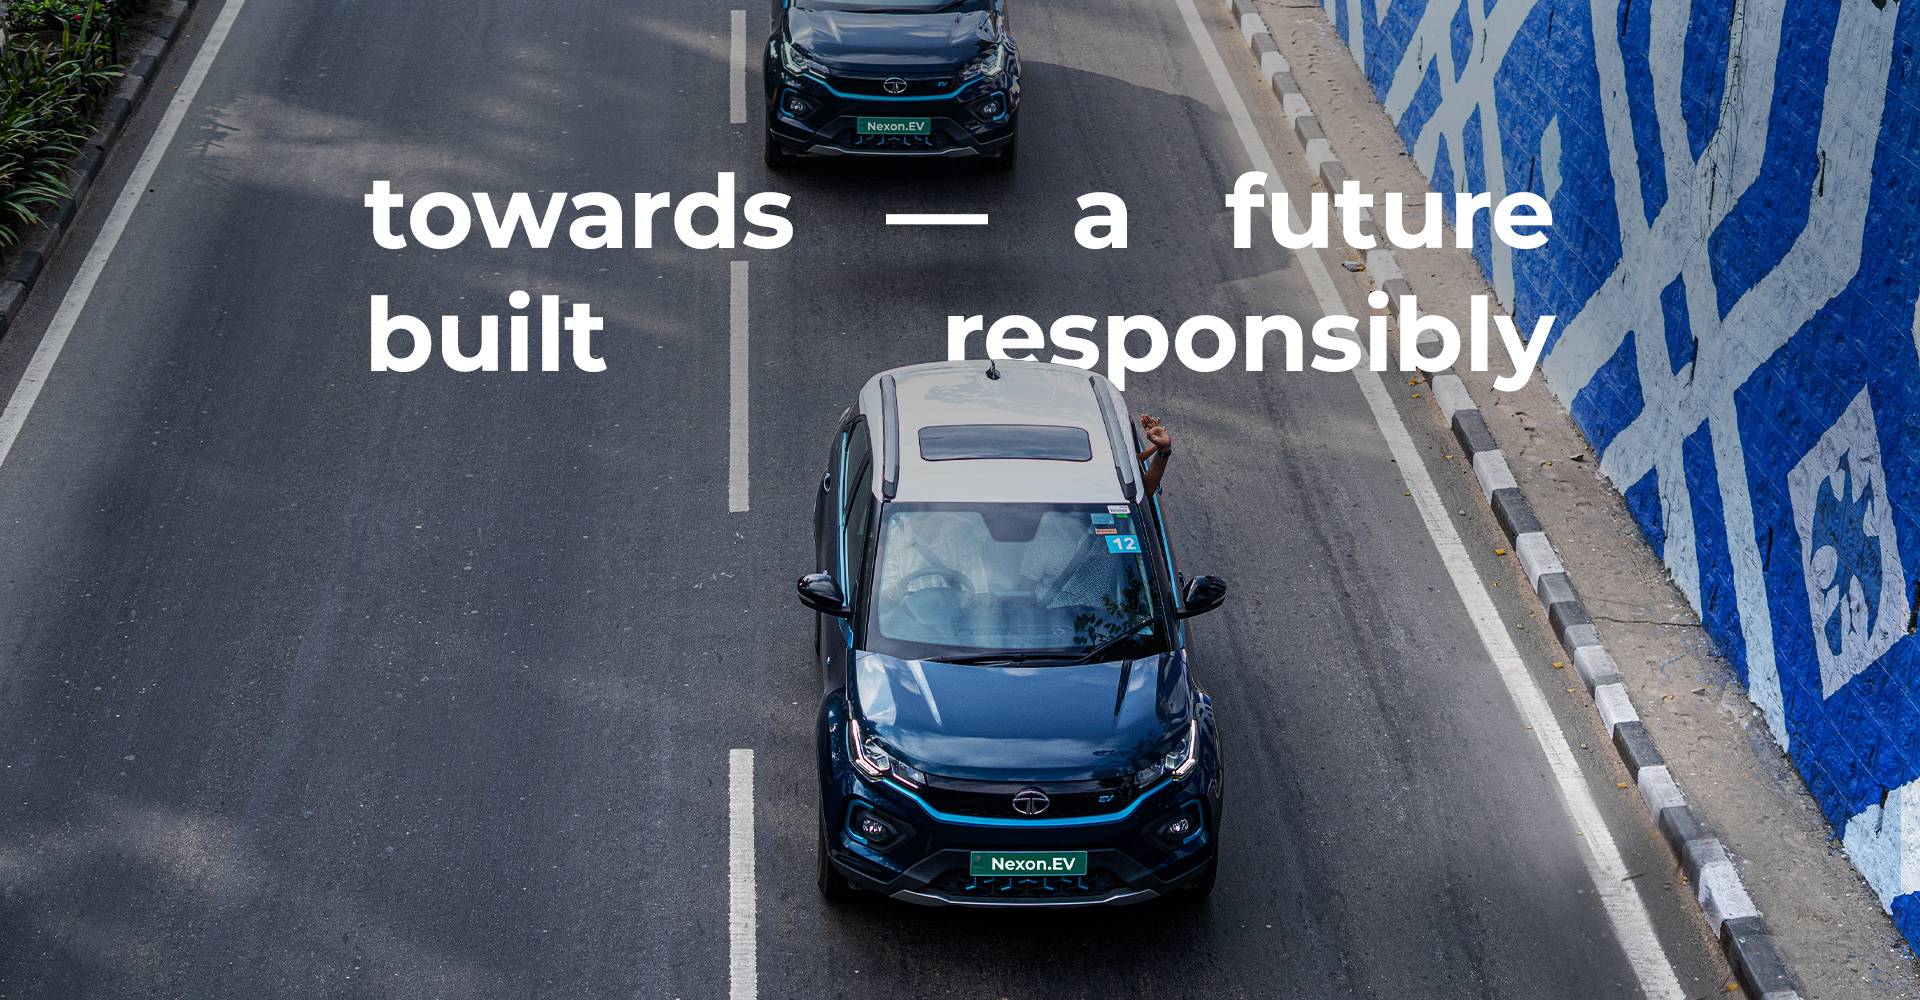 towards - a future built responsibly